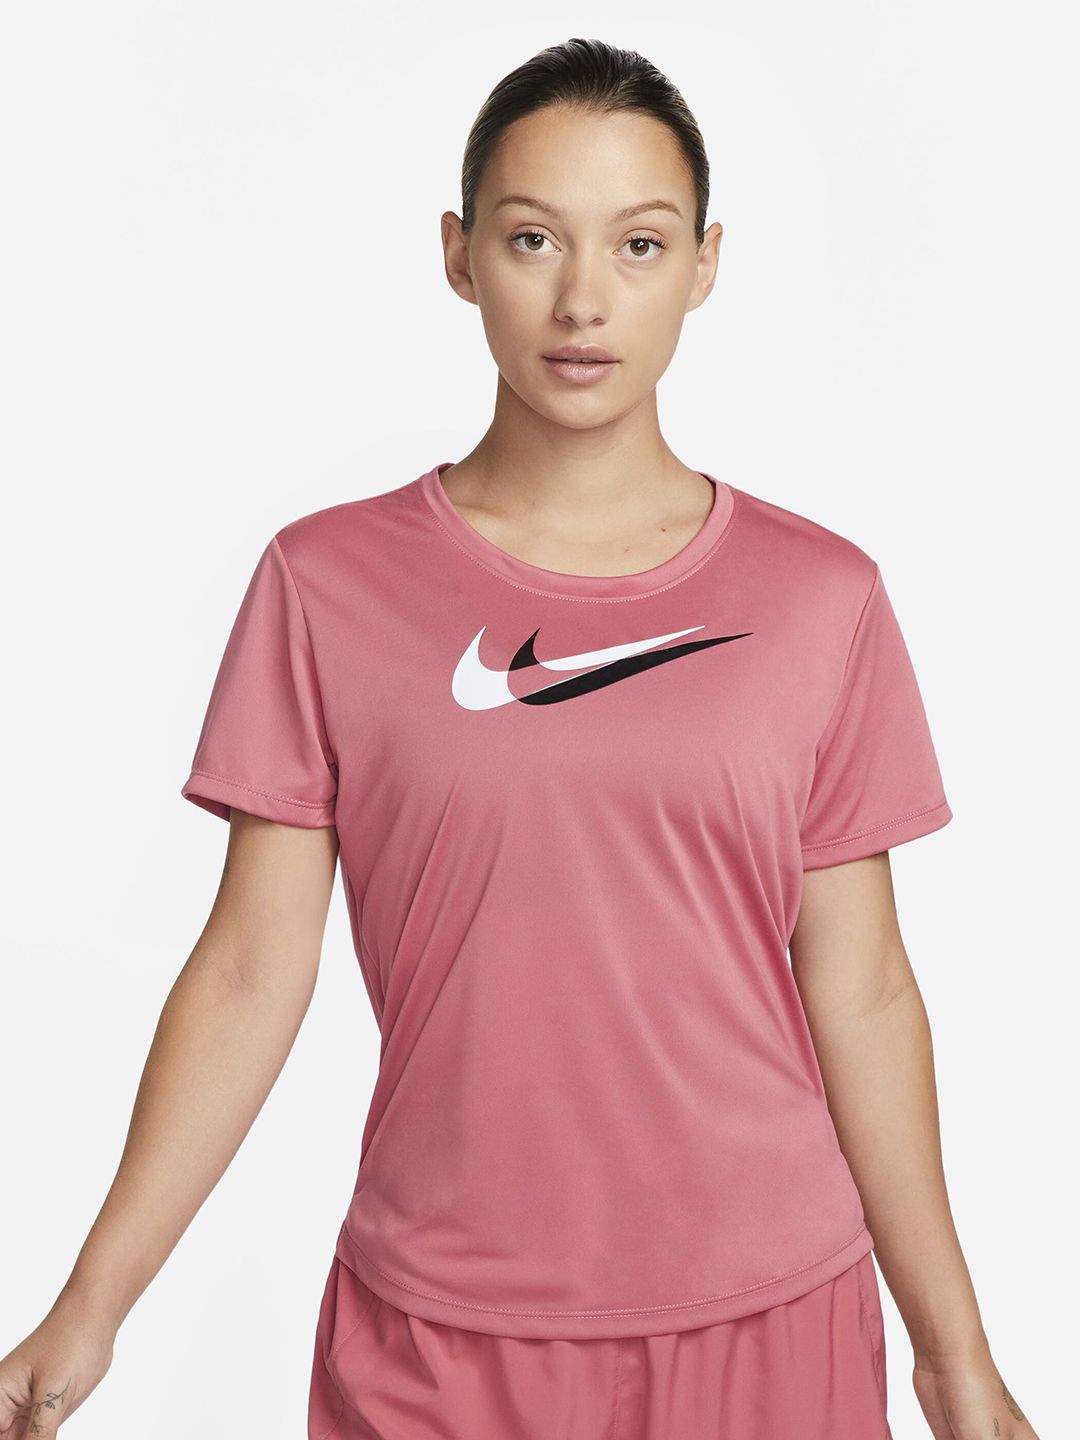 Nike Dri-FIT Swoosh Run Short-Sleeve Running Top Price in India